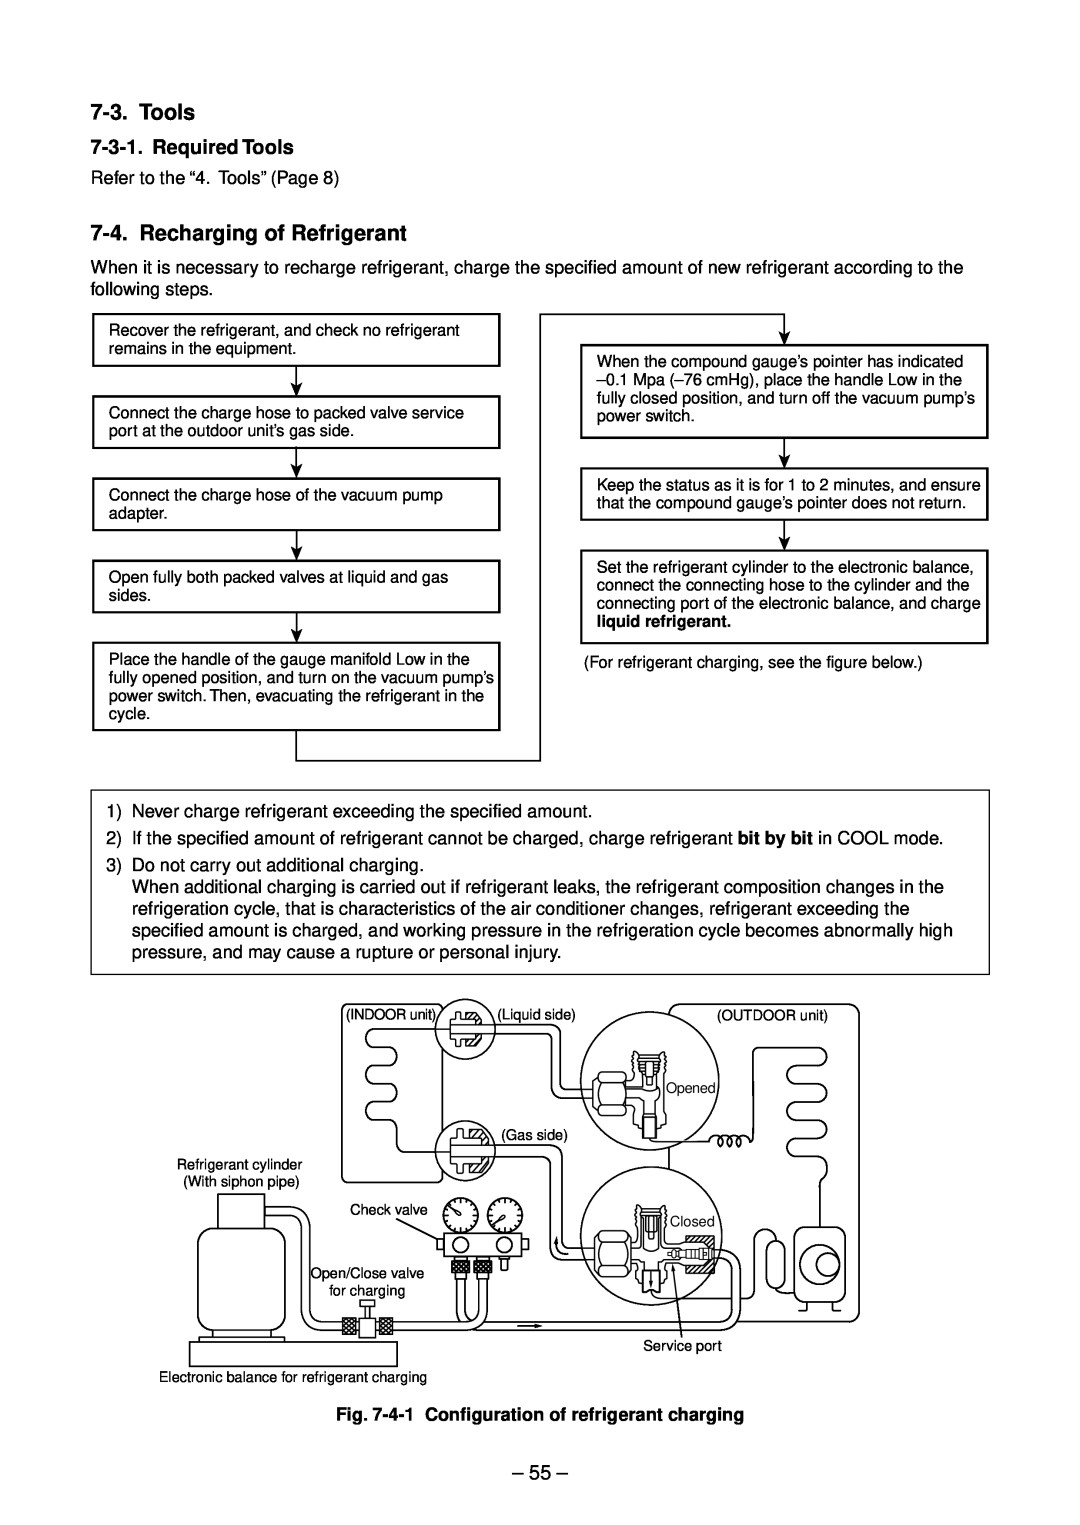 Toshiba RAV-SP1102UT-E Recharging of Refrigerant, Required Tools, 4-1 Configuration of refrigerant charging 